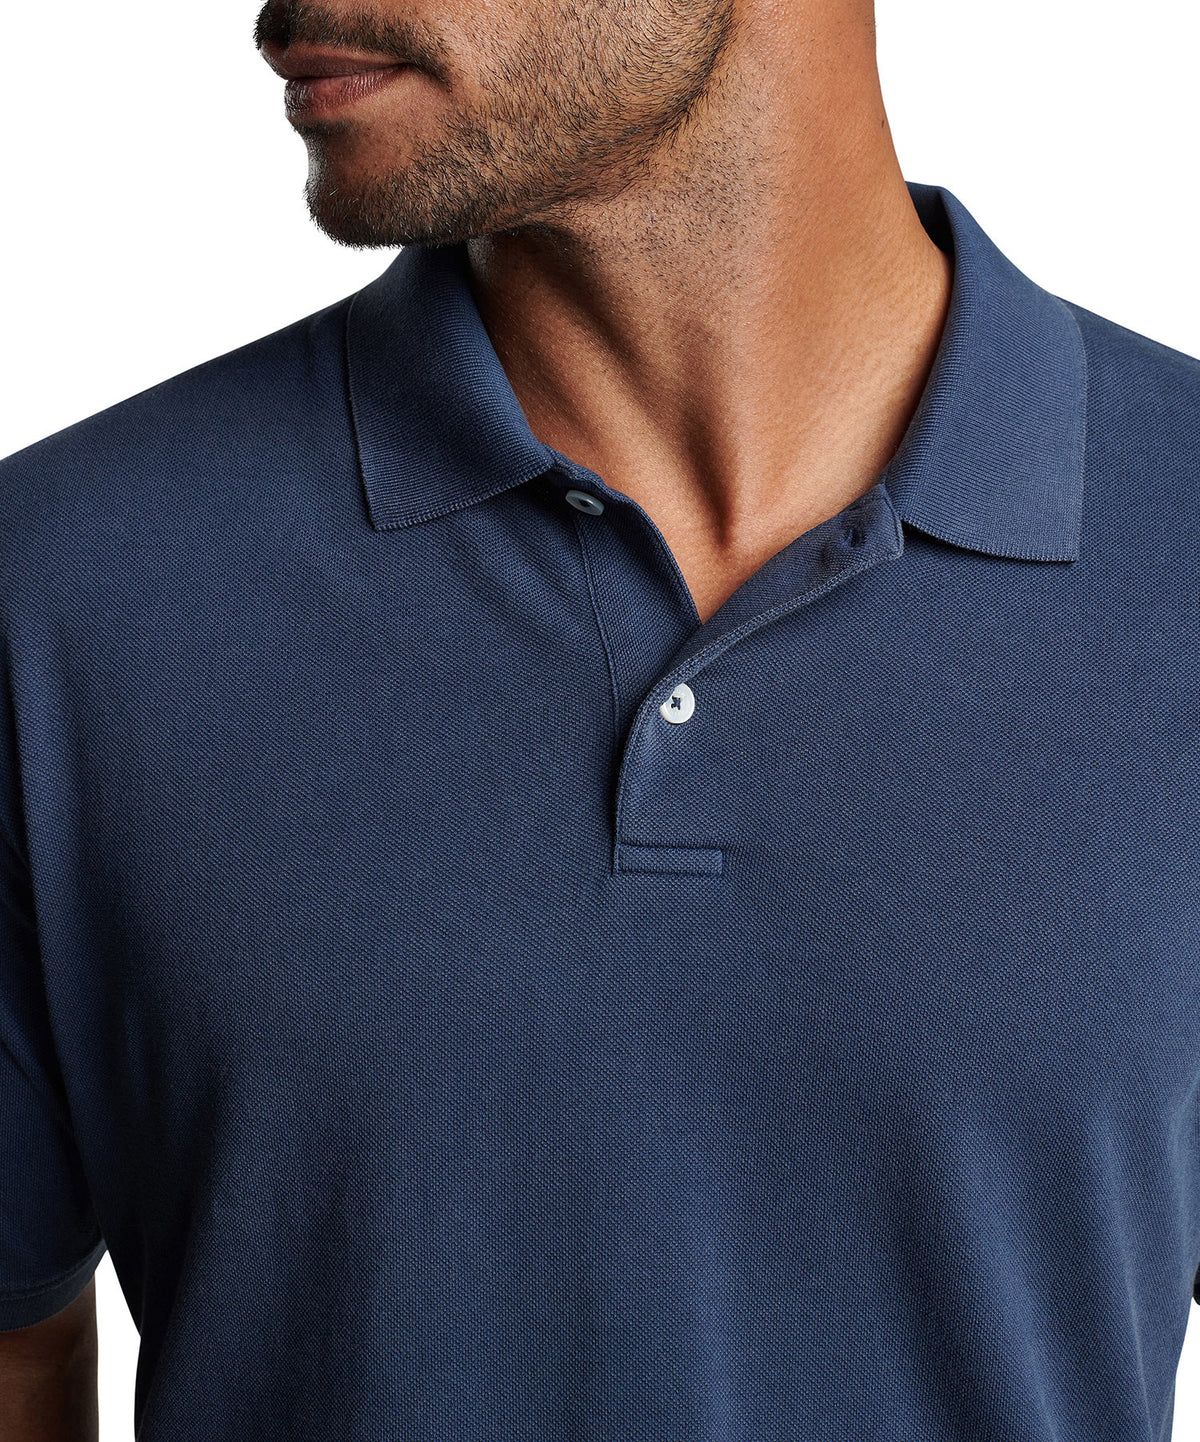 Peter Millar Short Sleeve Sunrise Pique Polo Knit Shirt